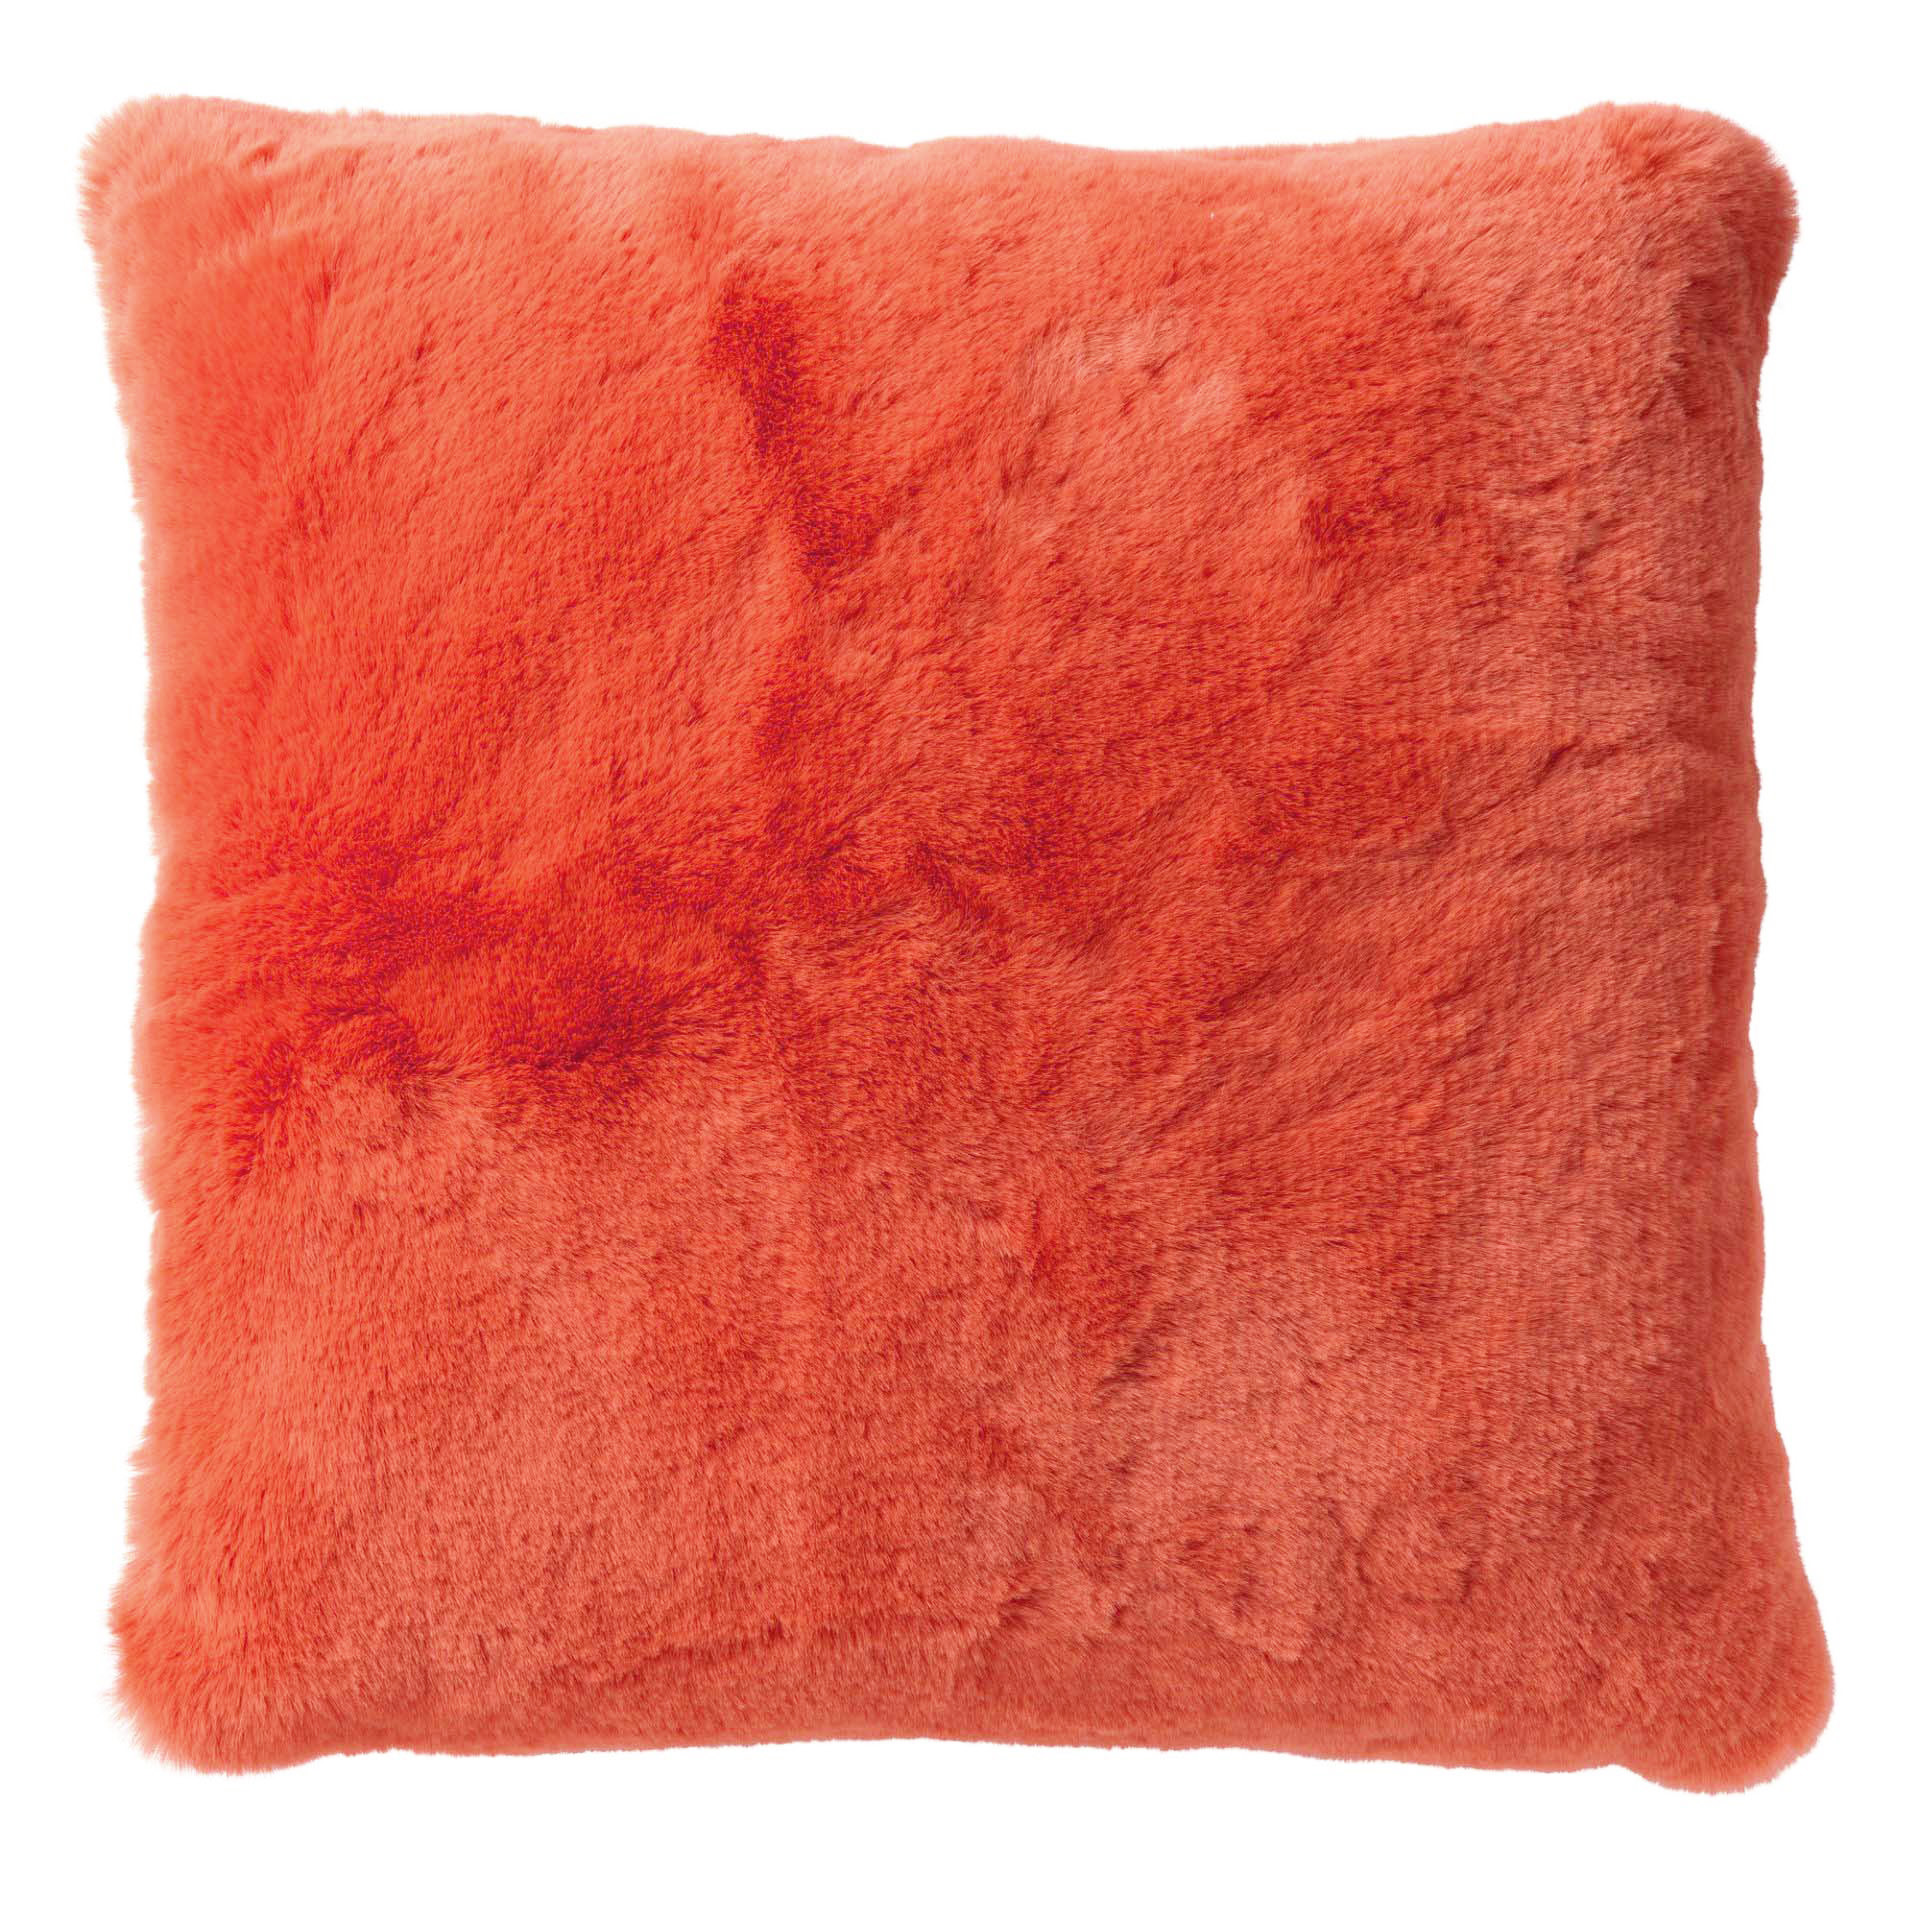 ZAYA - Kussenhoes unikleur 45x45 cm - Coral - koraalroze - oranje - superzacht